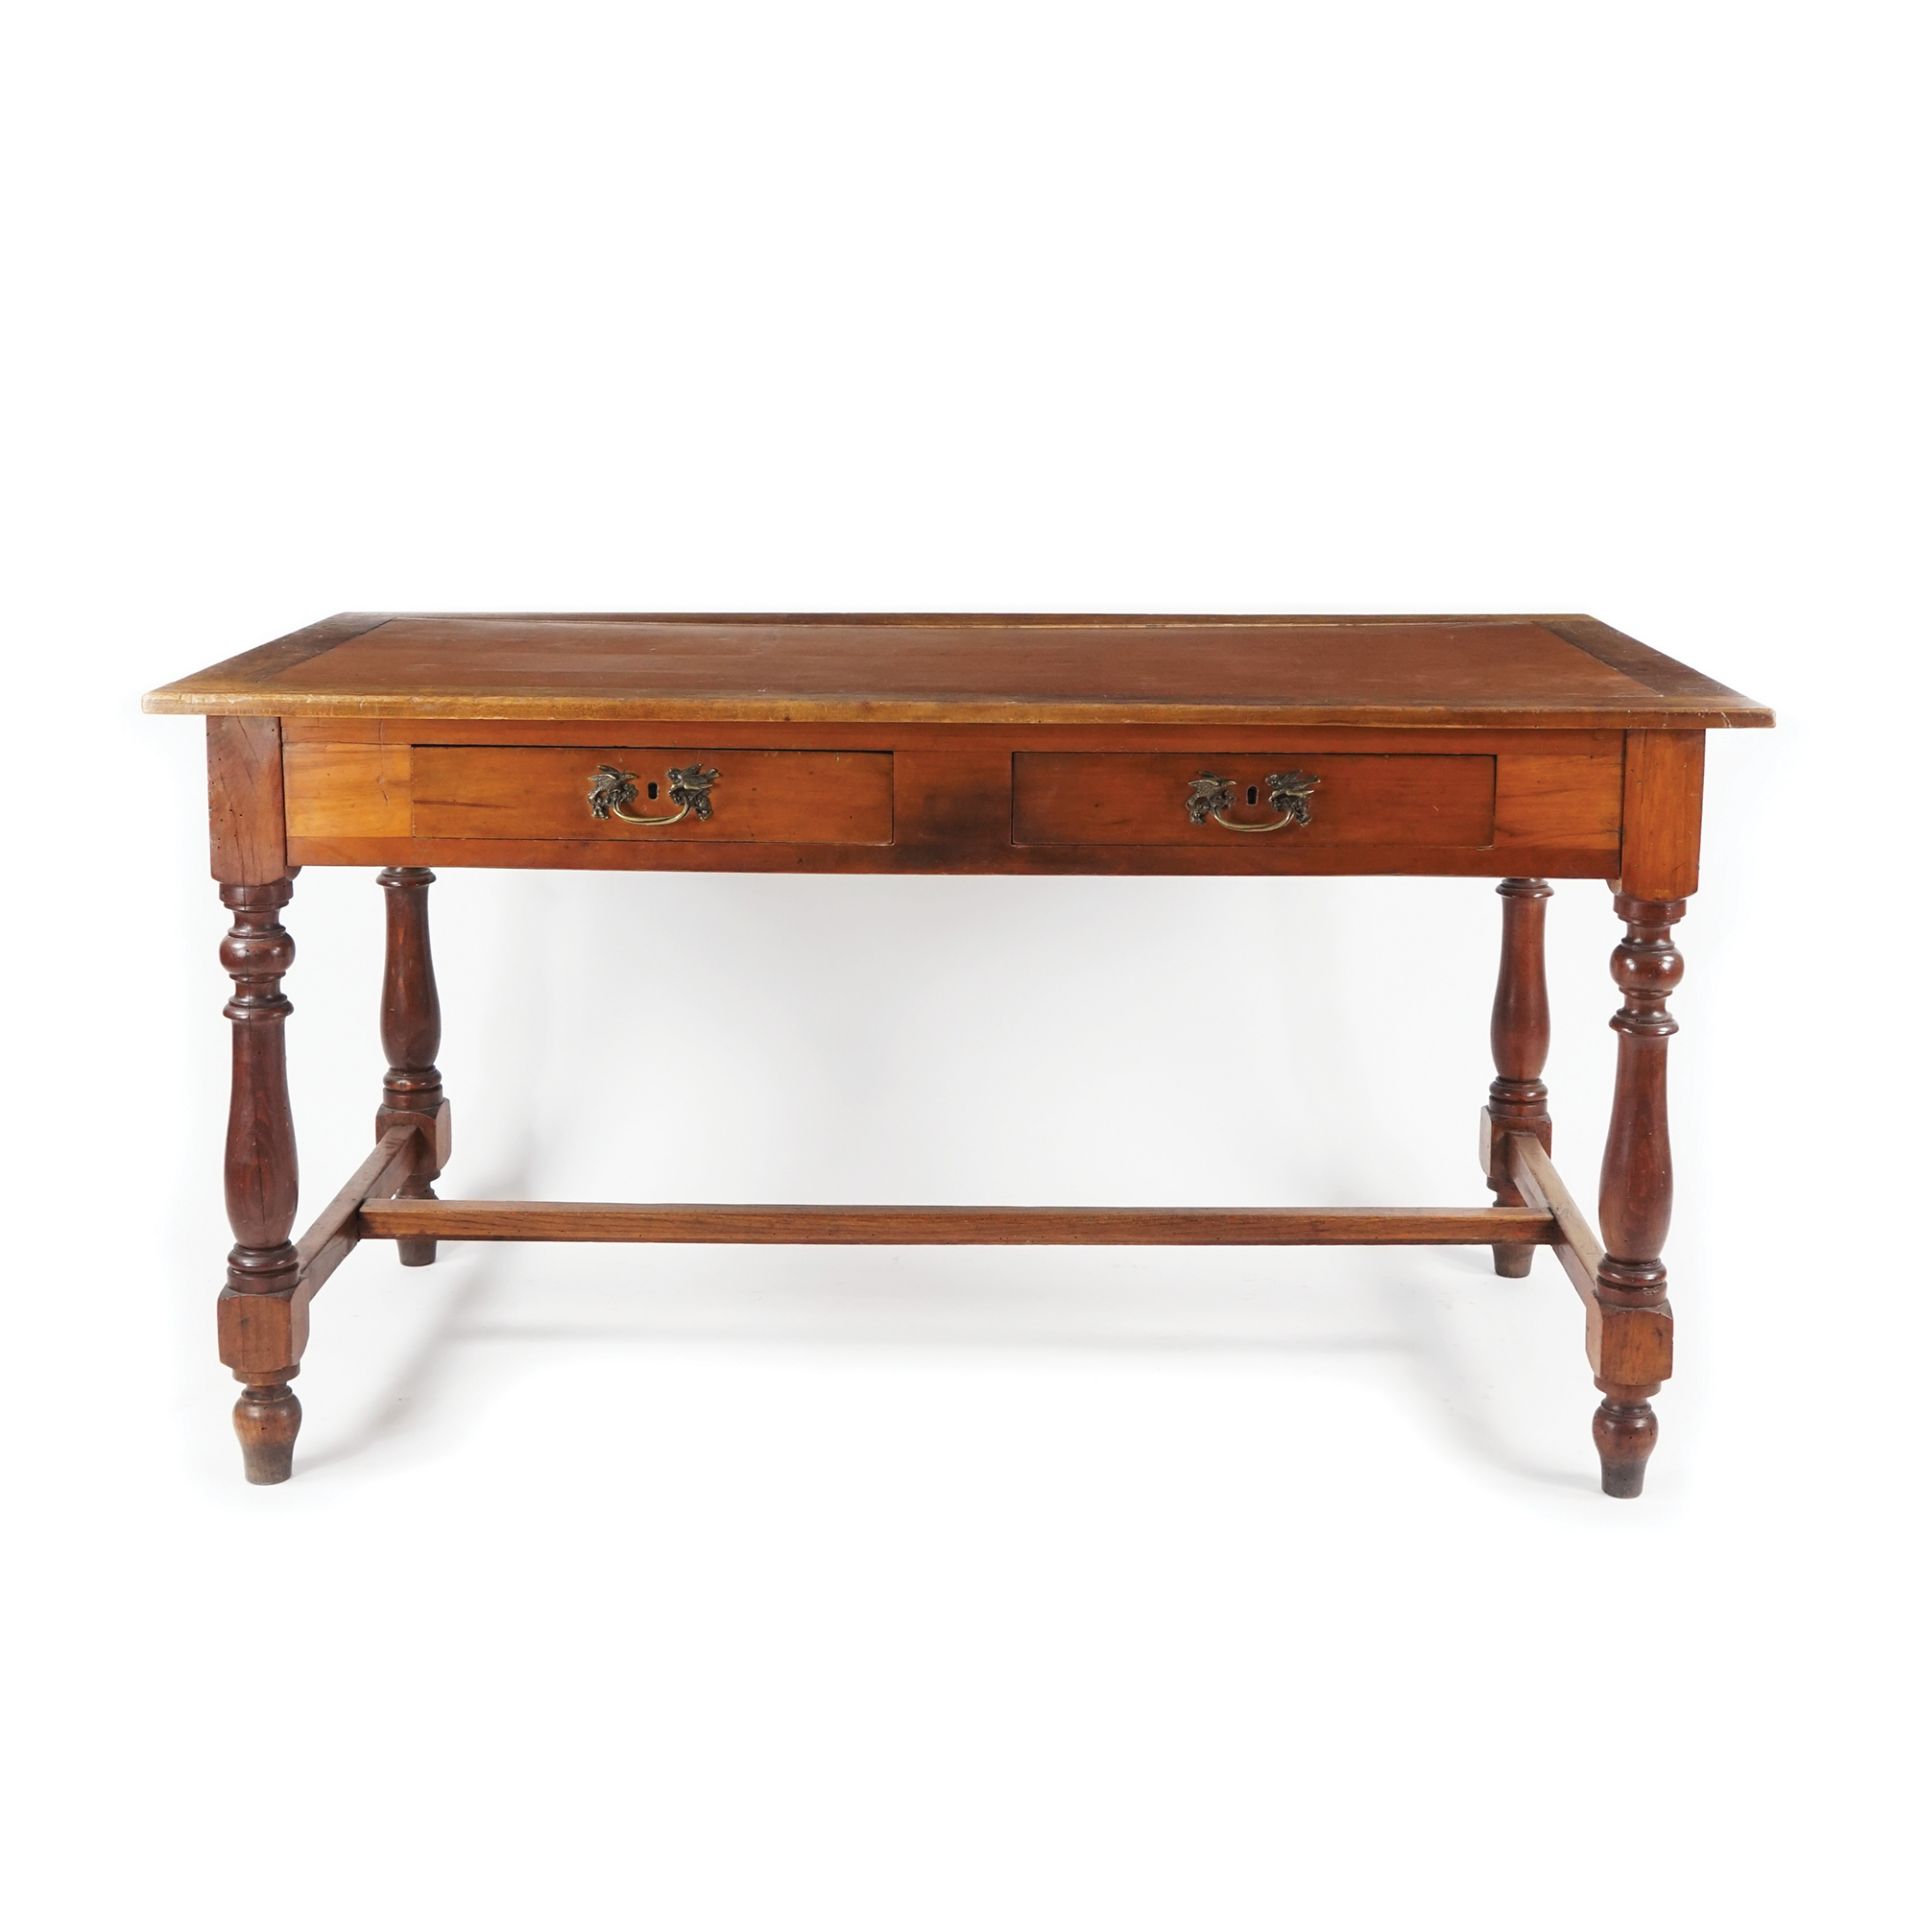 A walnut table, 19th century